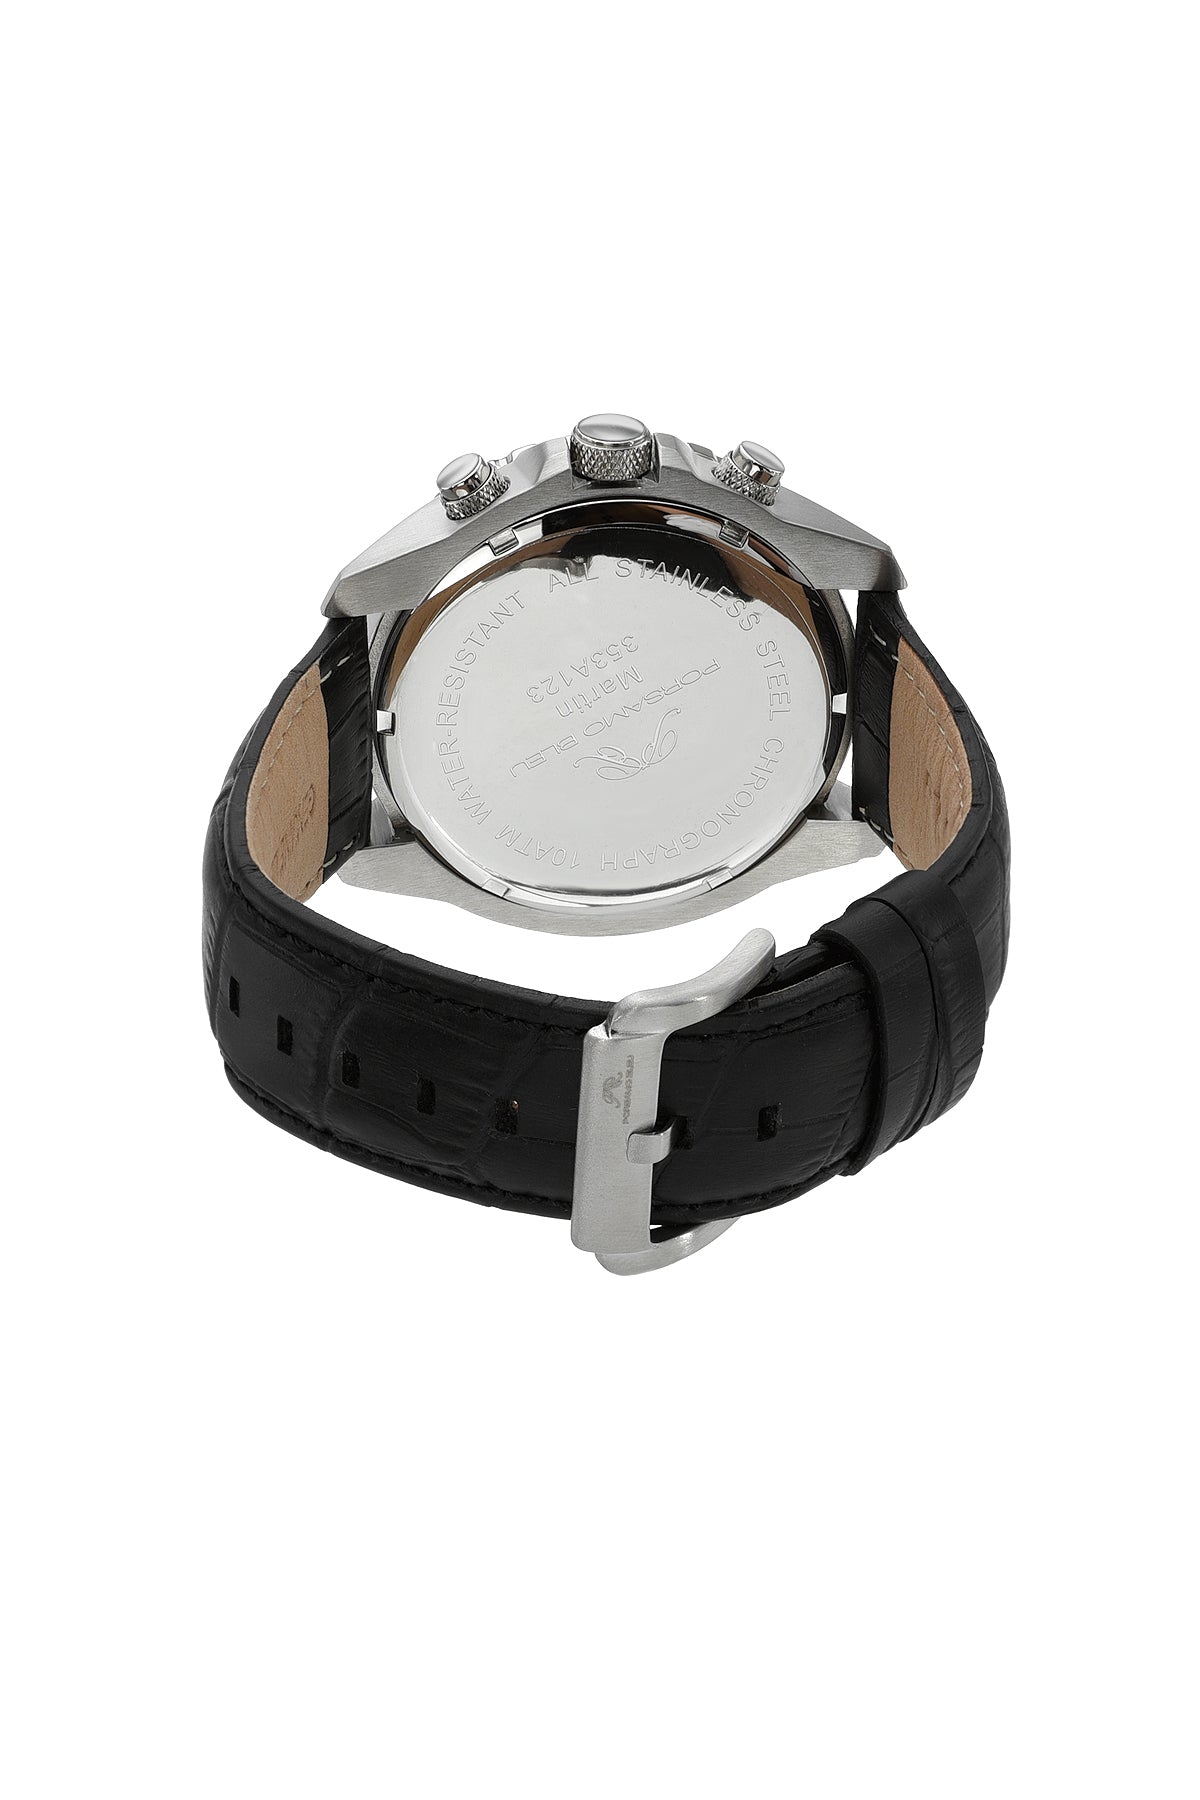 Porsamo Bleu Martin Luxury Chronograph Men's Watch Genuine Leather Band, Silver, Black 353AMAL